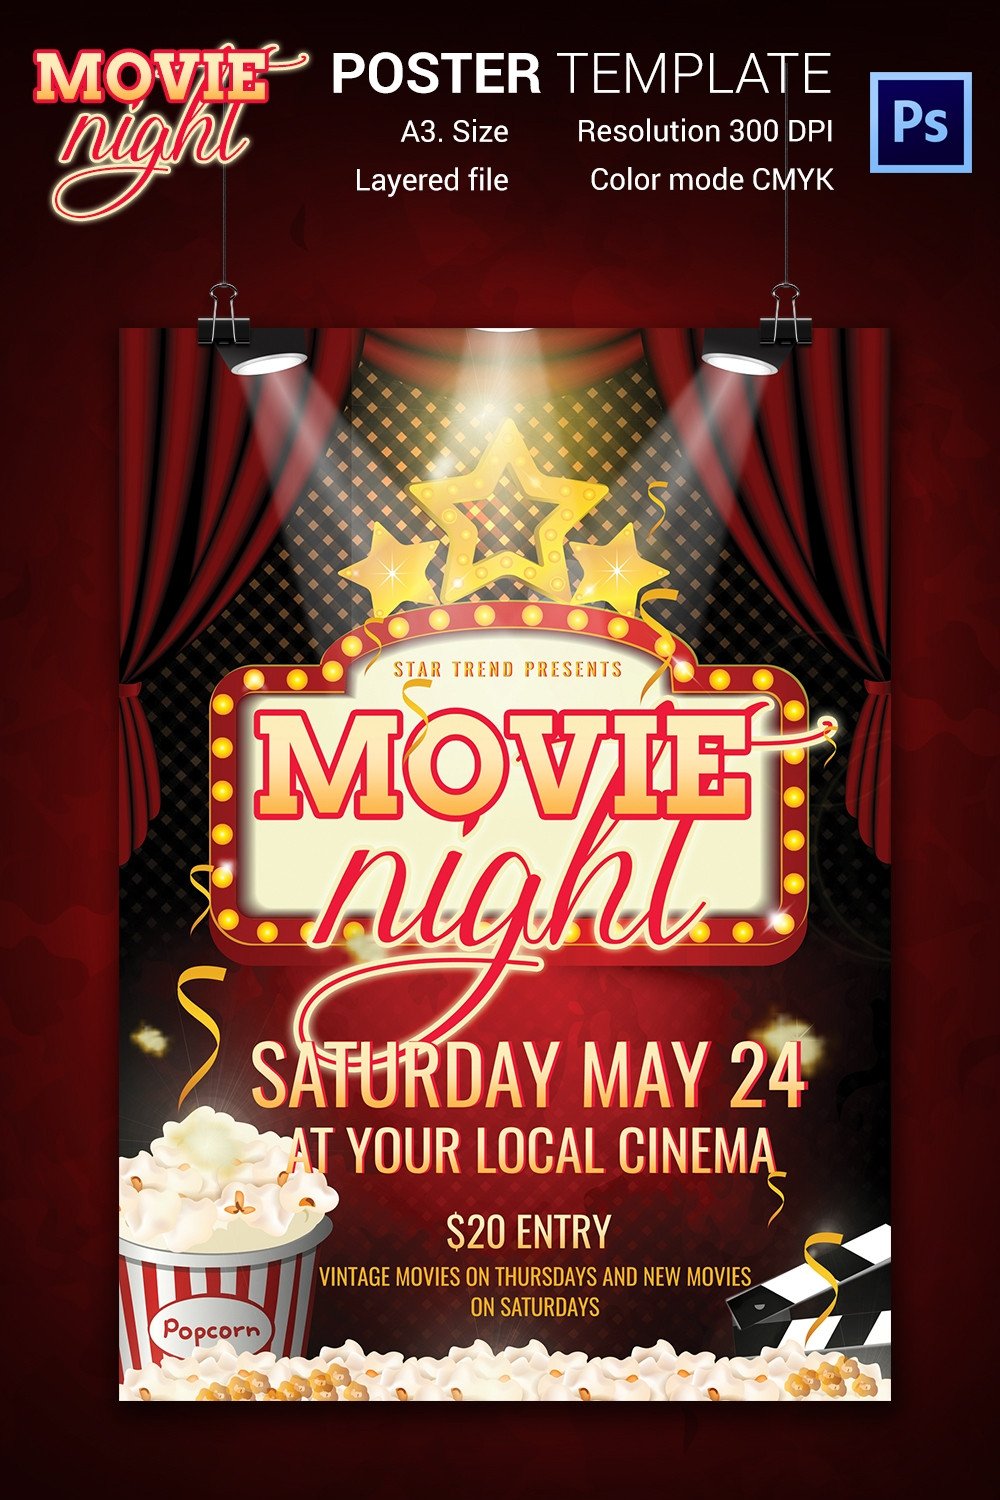 Movie Night Flyer Template 25 Free JPG PSD Format